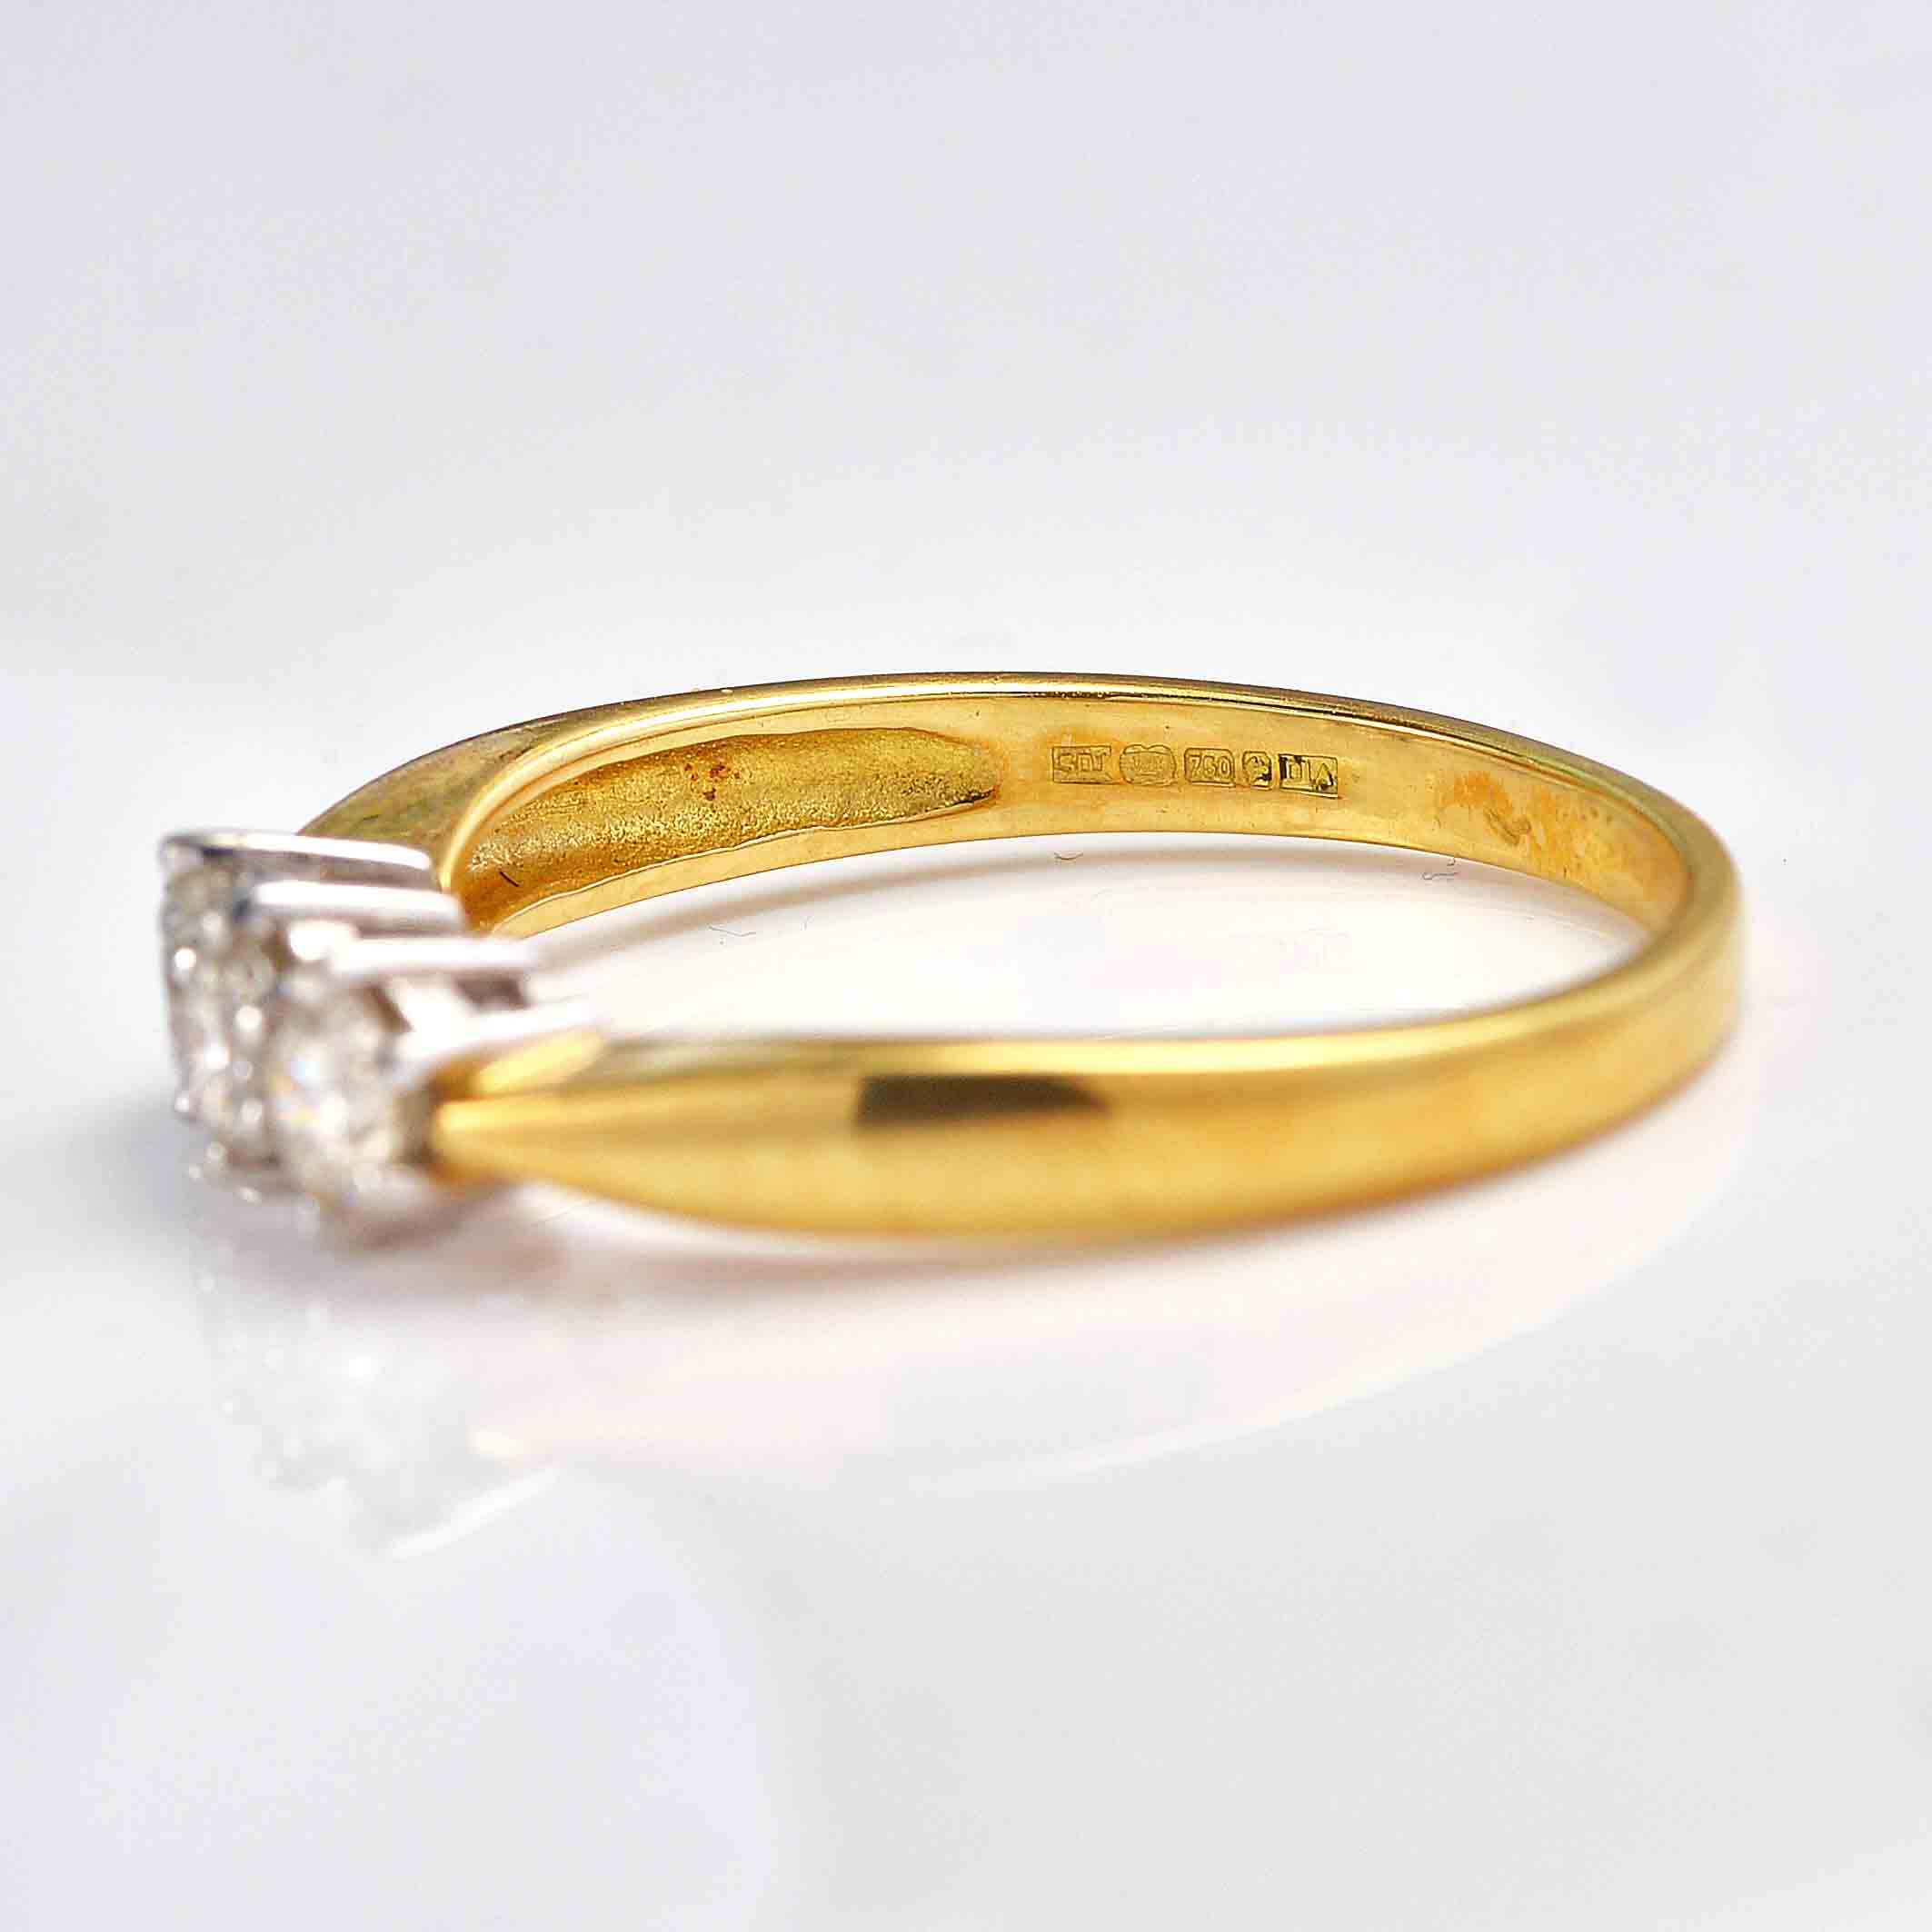 Ellibelle Jewellery Vintage Diamond 18ct Gold Three-Stone Engagement Ring (0.57cts)